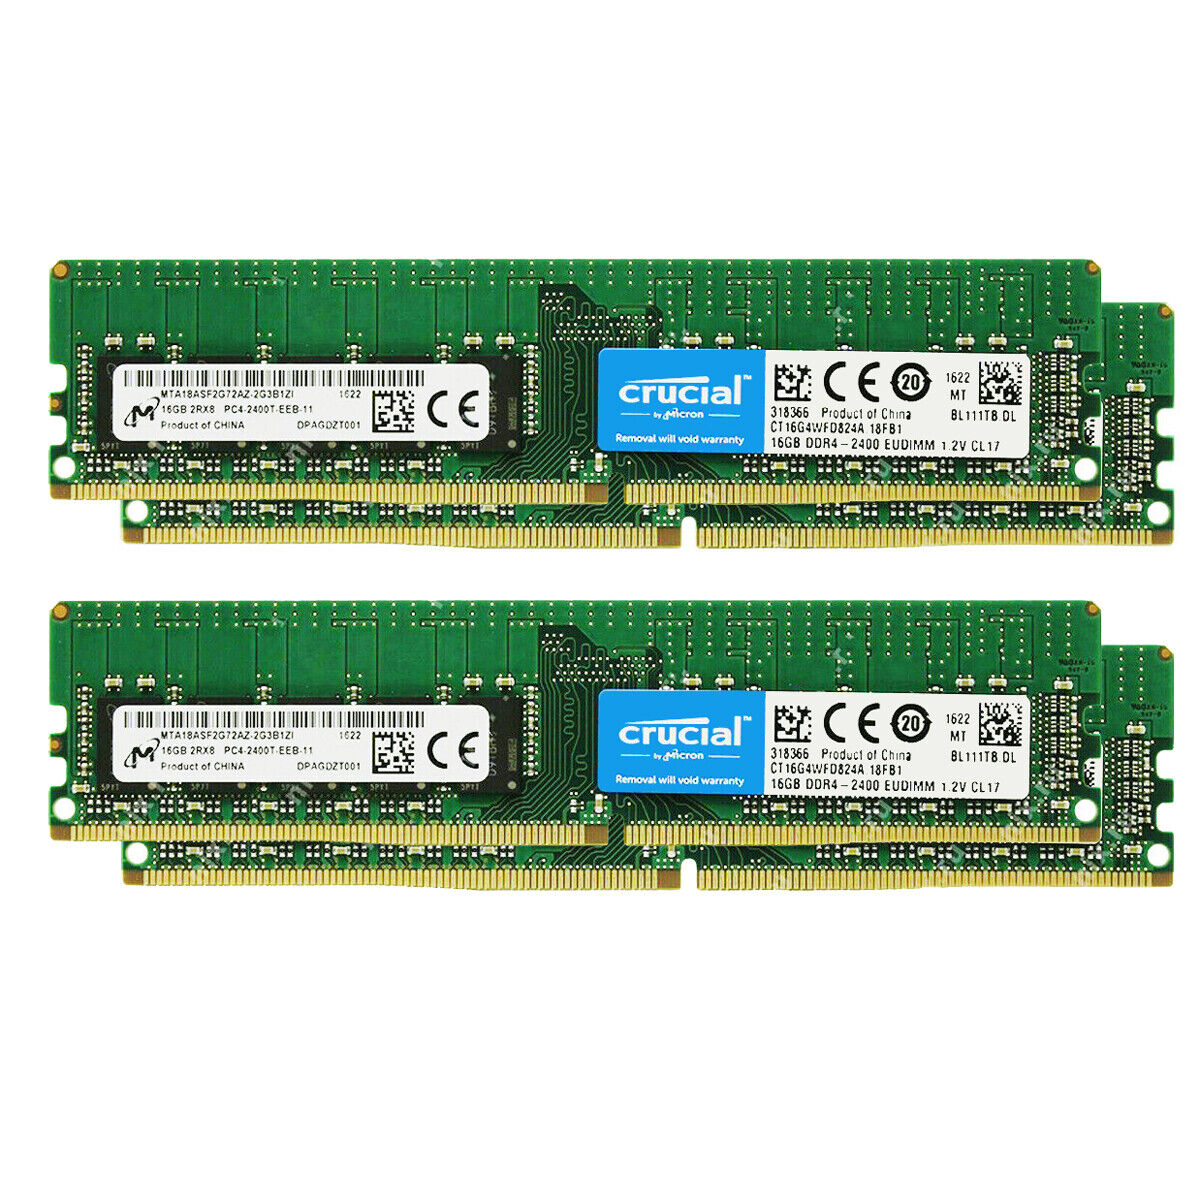 Crucial DDR4 64GB(4 x 16GB) KIT 2400MHz 2Rx8 ECC Server Memory RAM CT16G4WFD824A